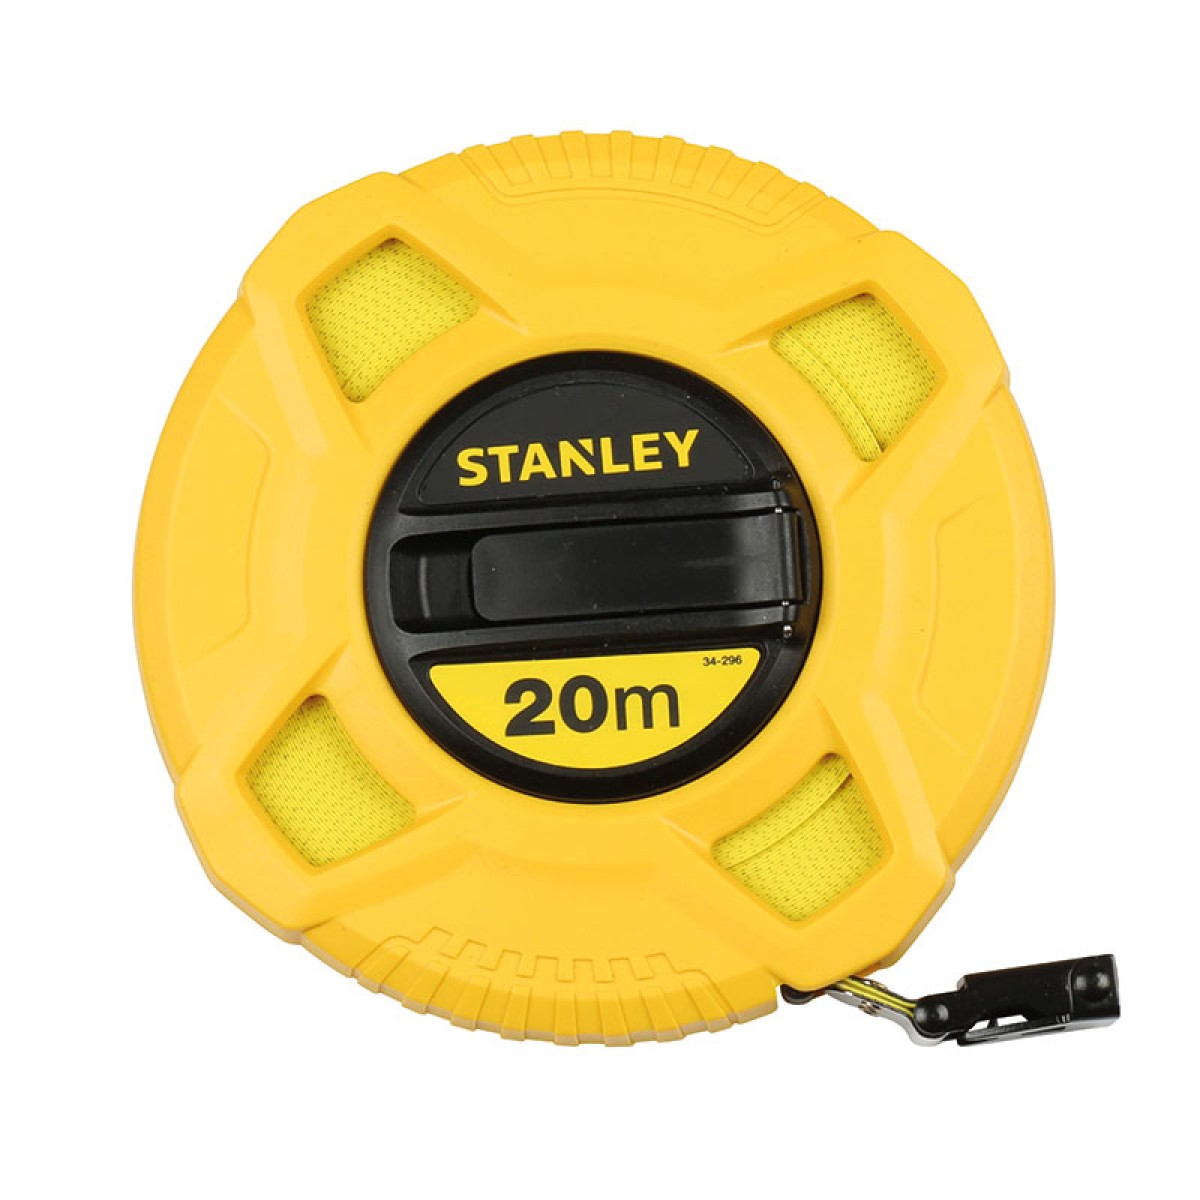 Closed Case 20m Measuring Tape Stanley - 2